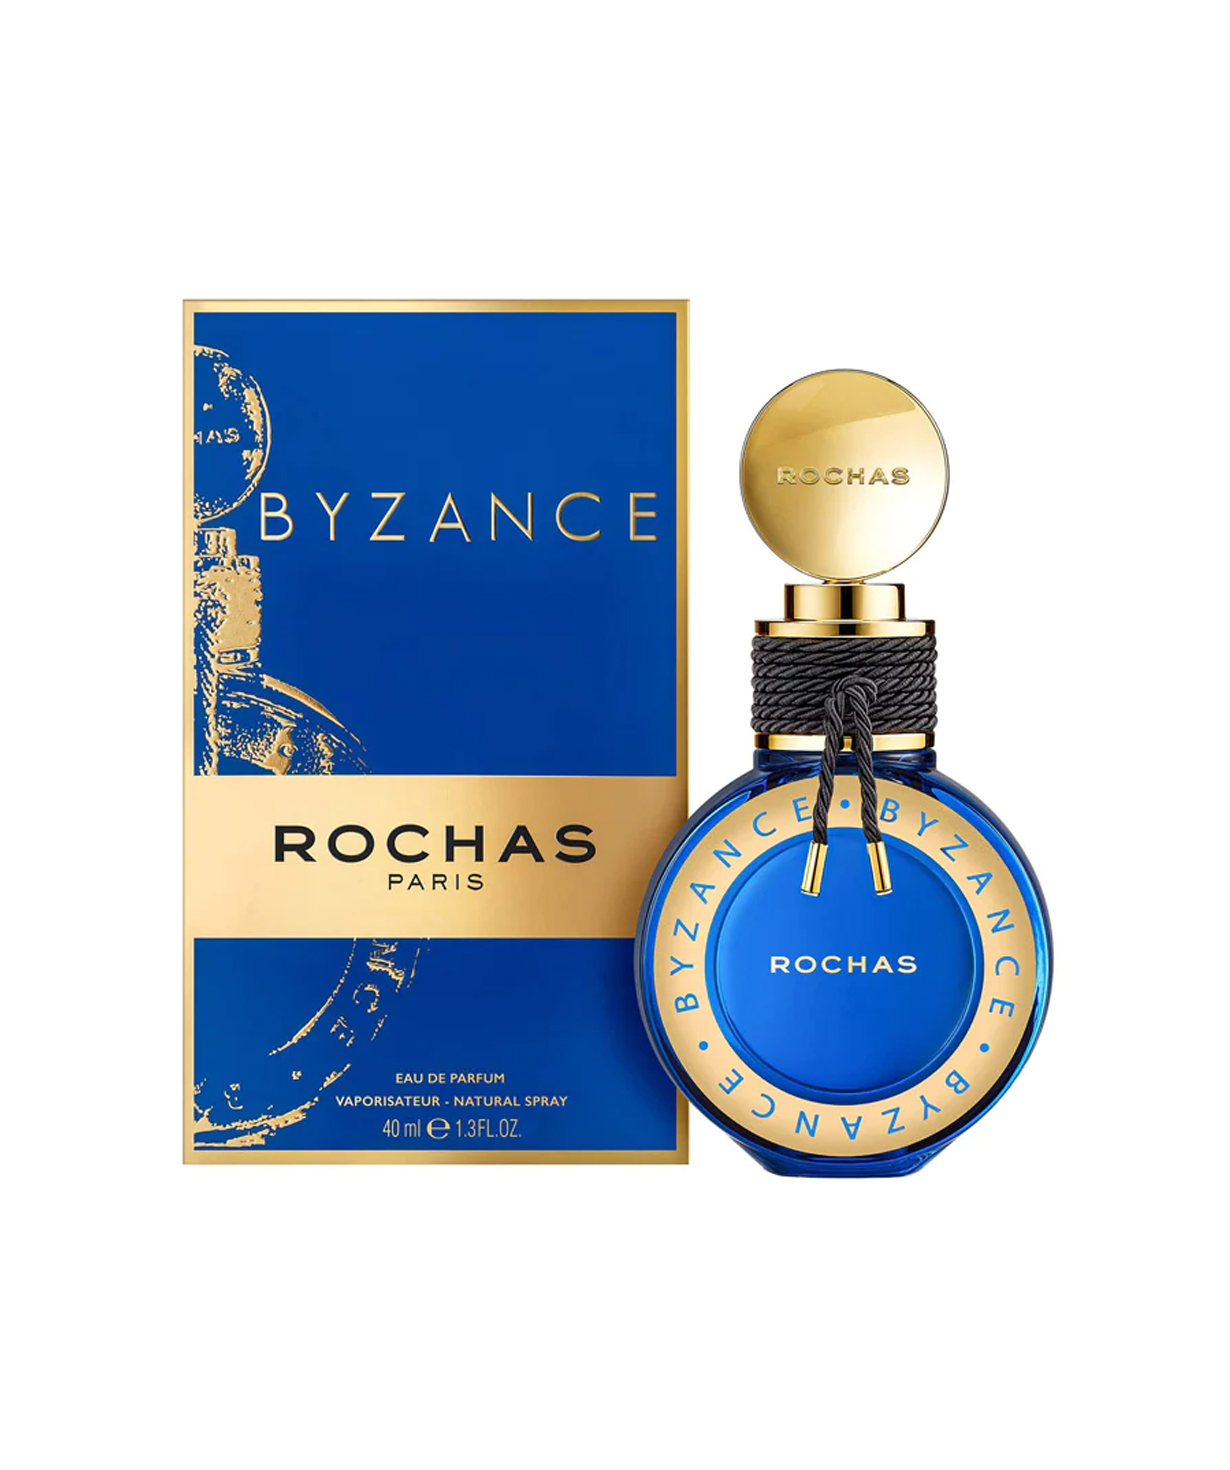 Perfume «Rochas» Byzance, for women, 40 ml